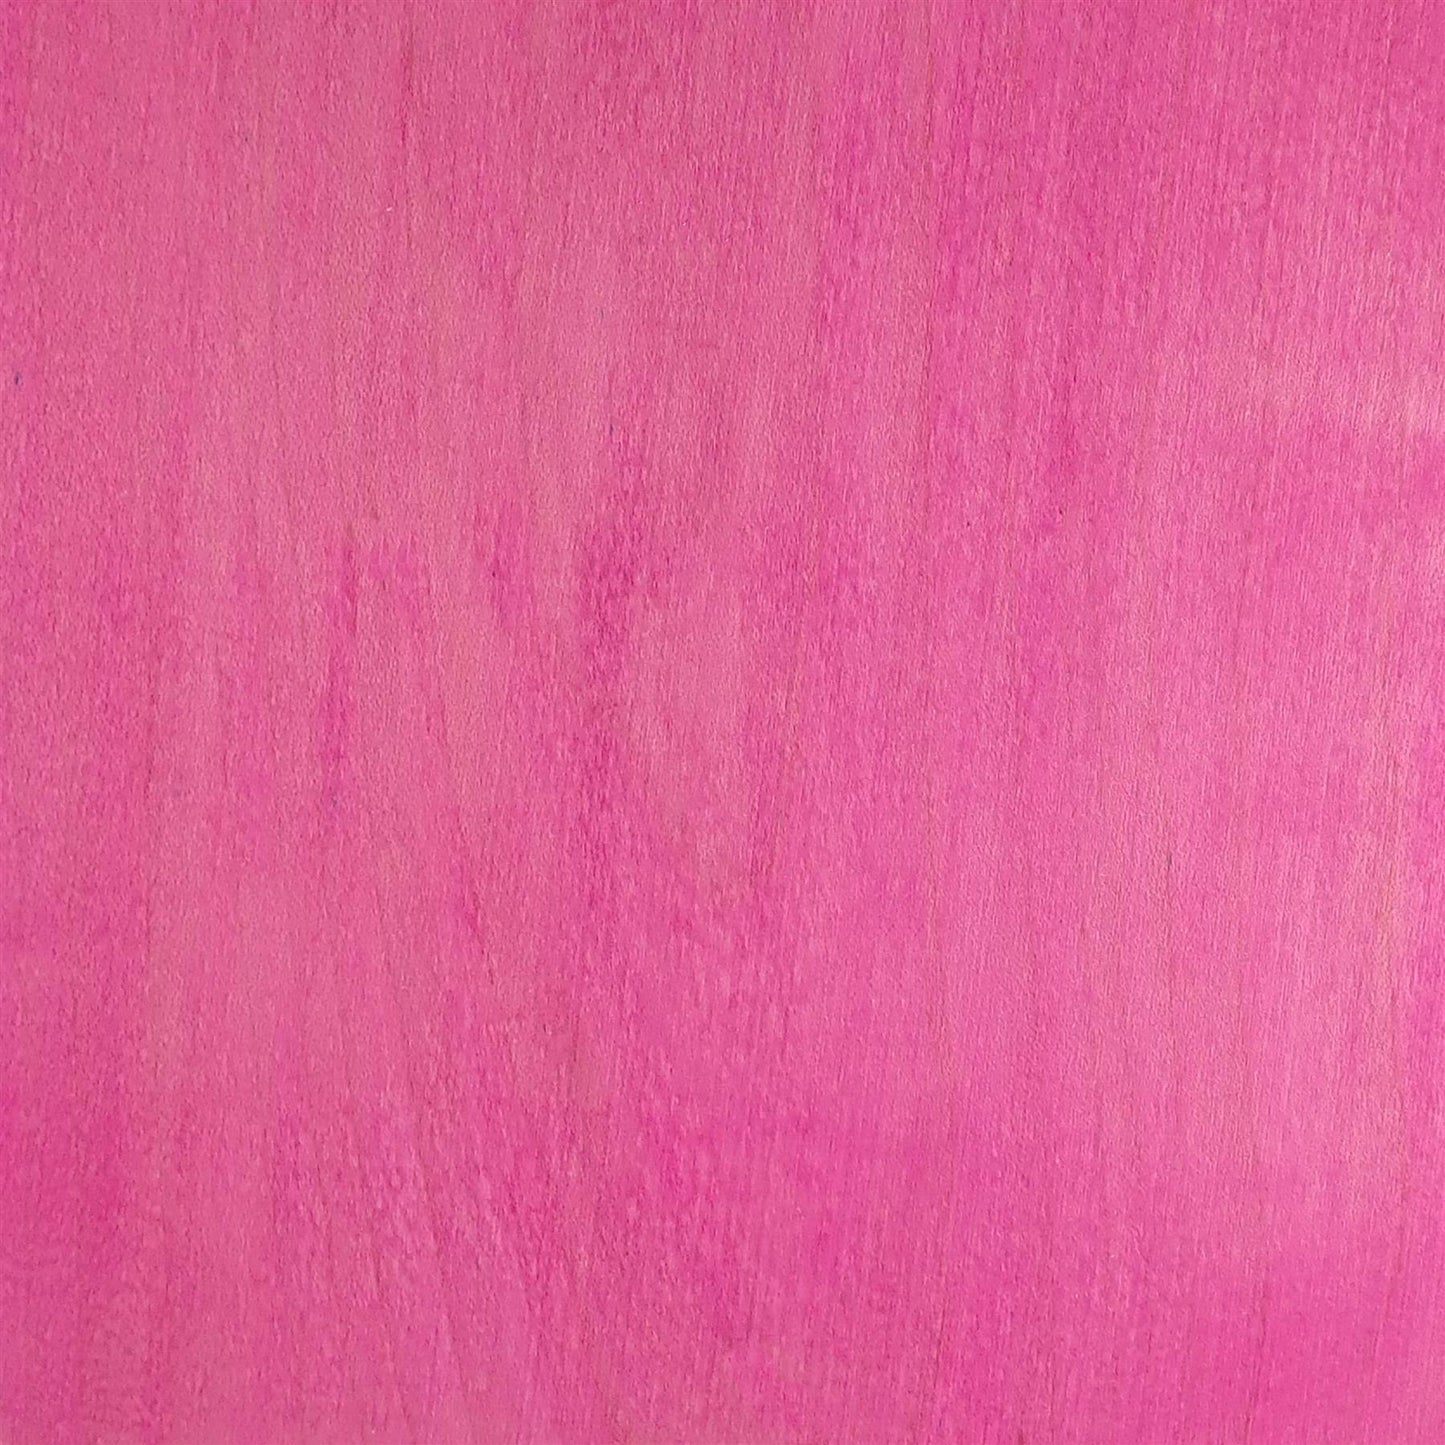 dartfords Bright Pink Alcohol Soluble Aniline Wood Dye Powder - 28g 1Oz